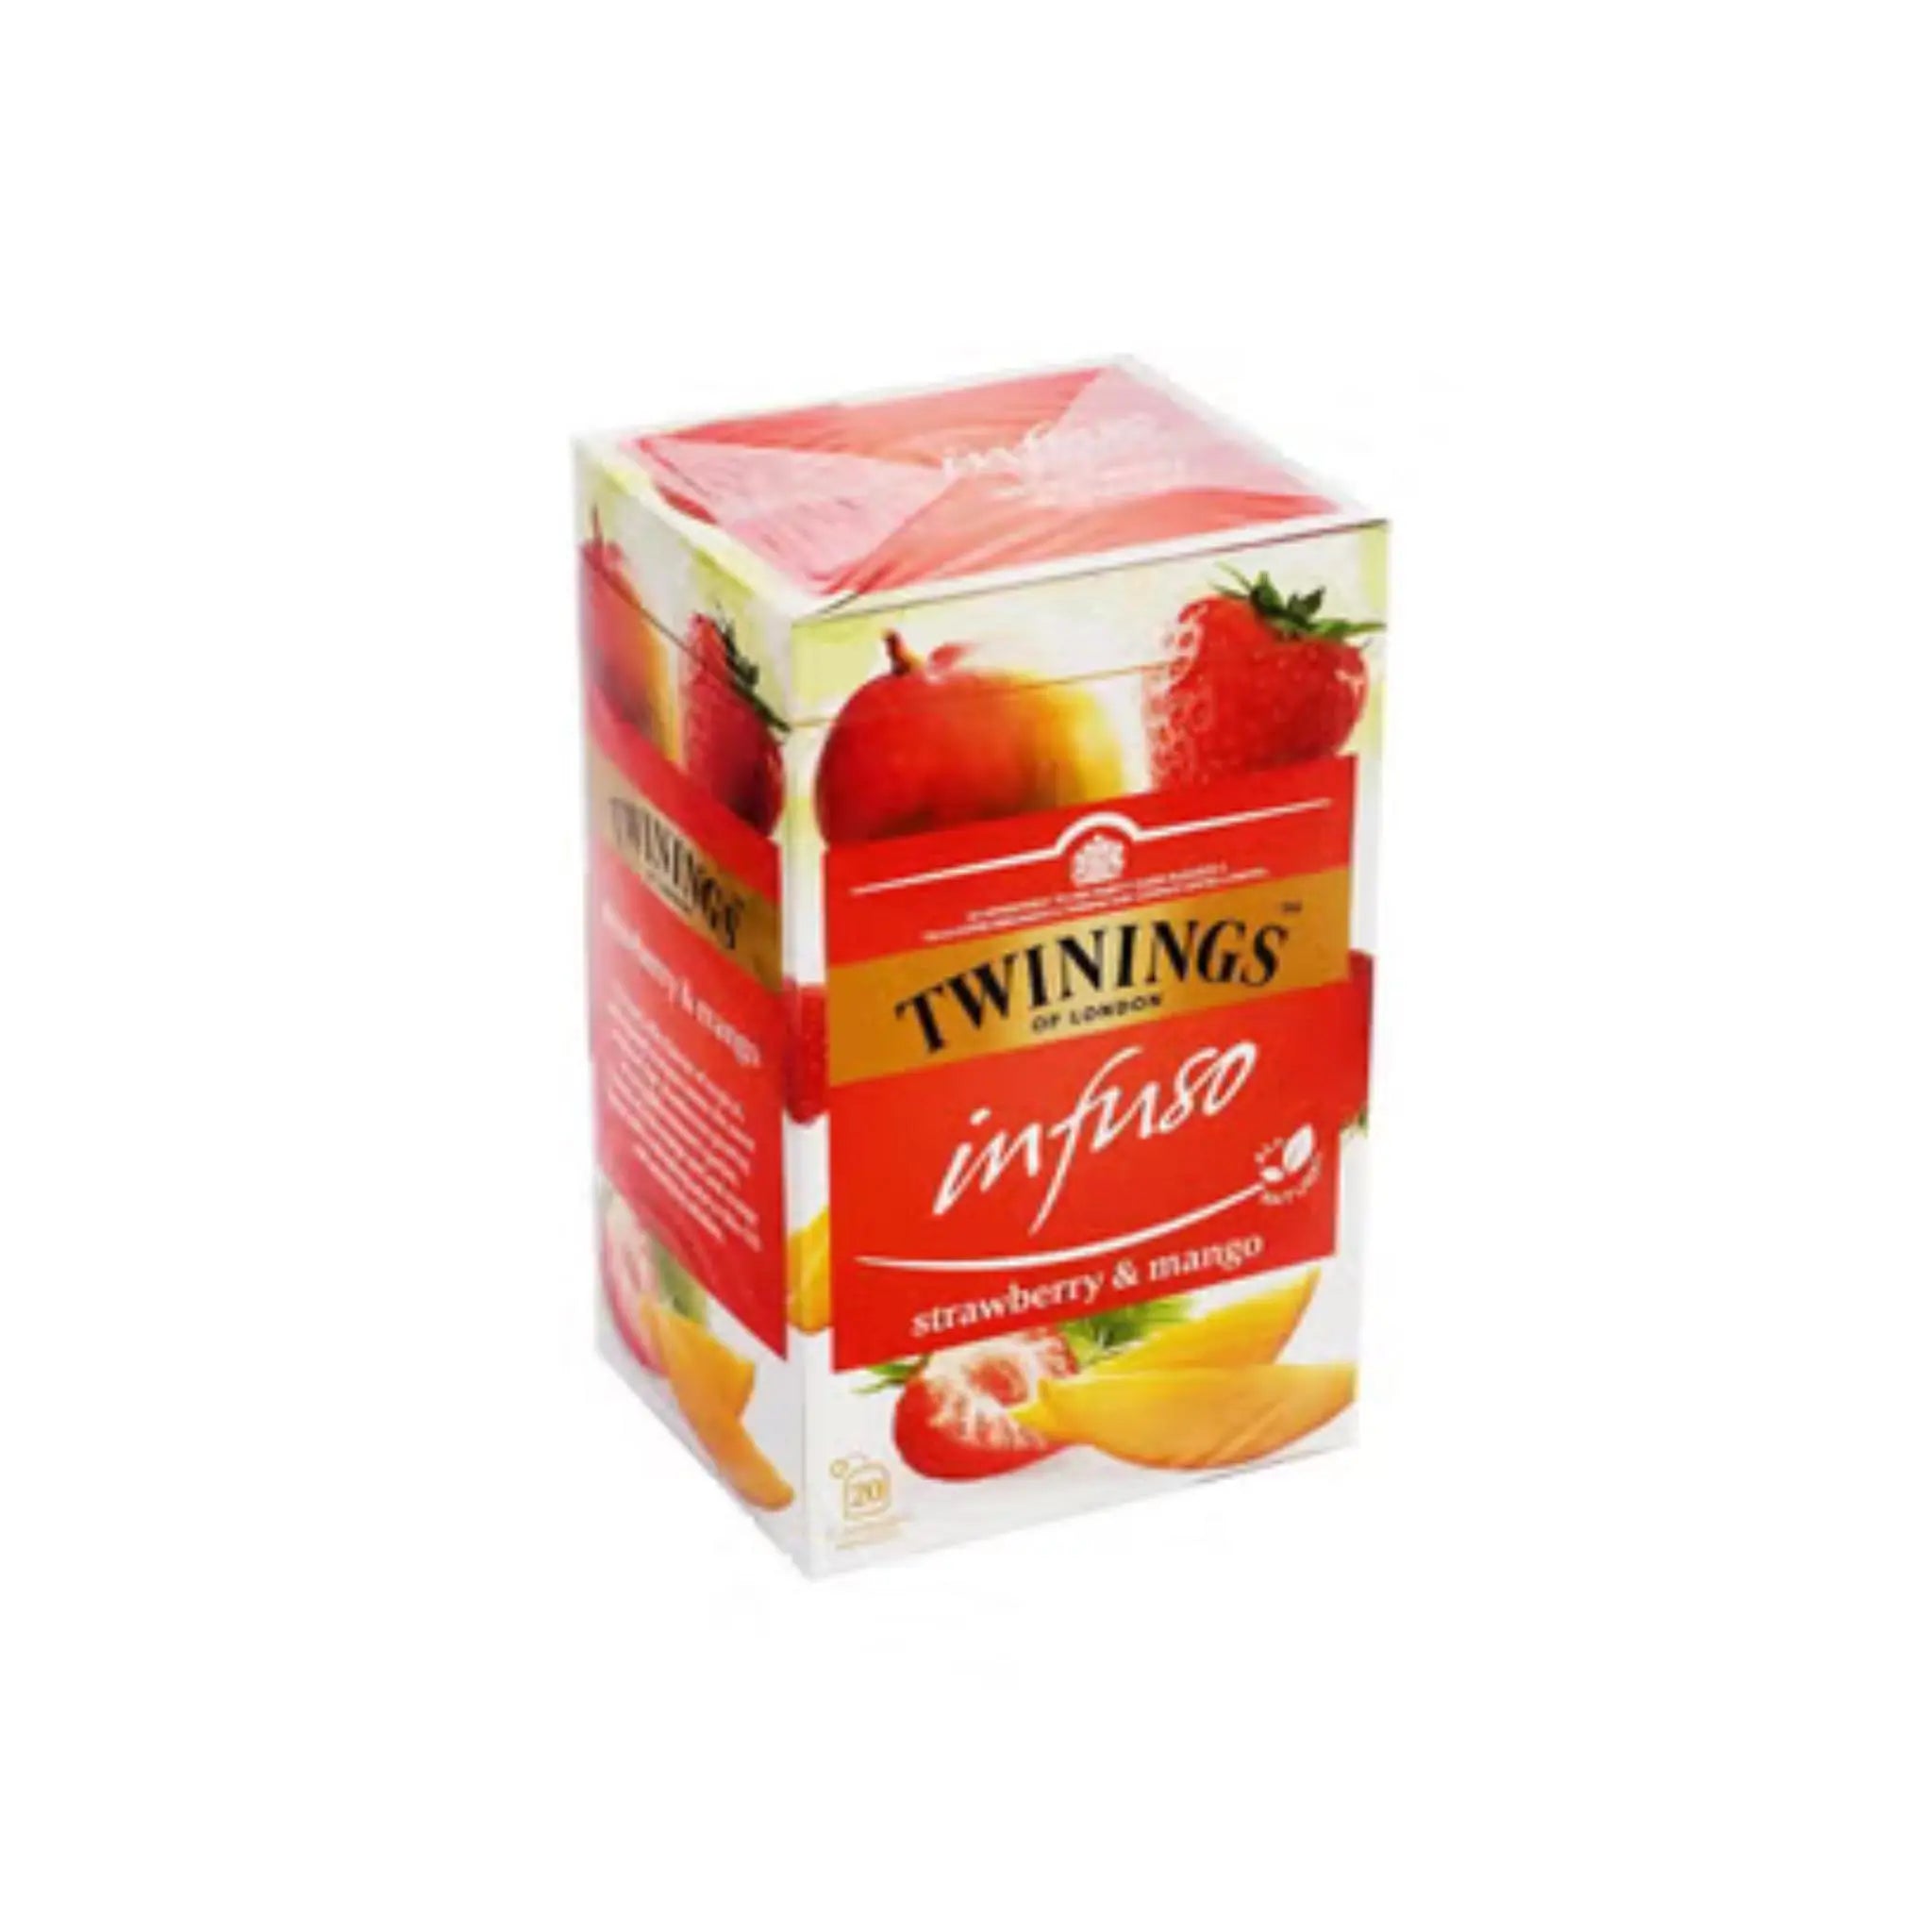 Twinings Infuso Strawberry & Mango Fruit Flavored Tea Bags (6x20's) Twinings